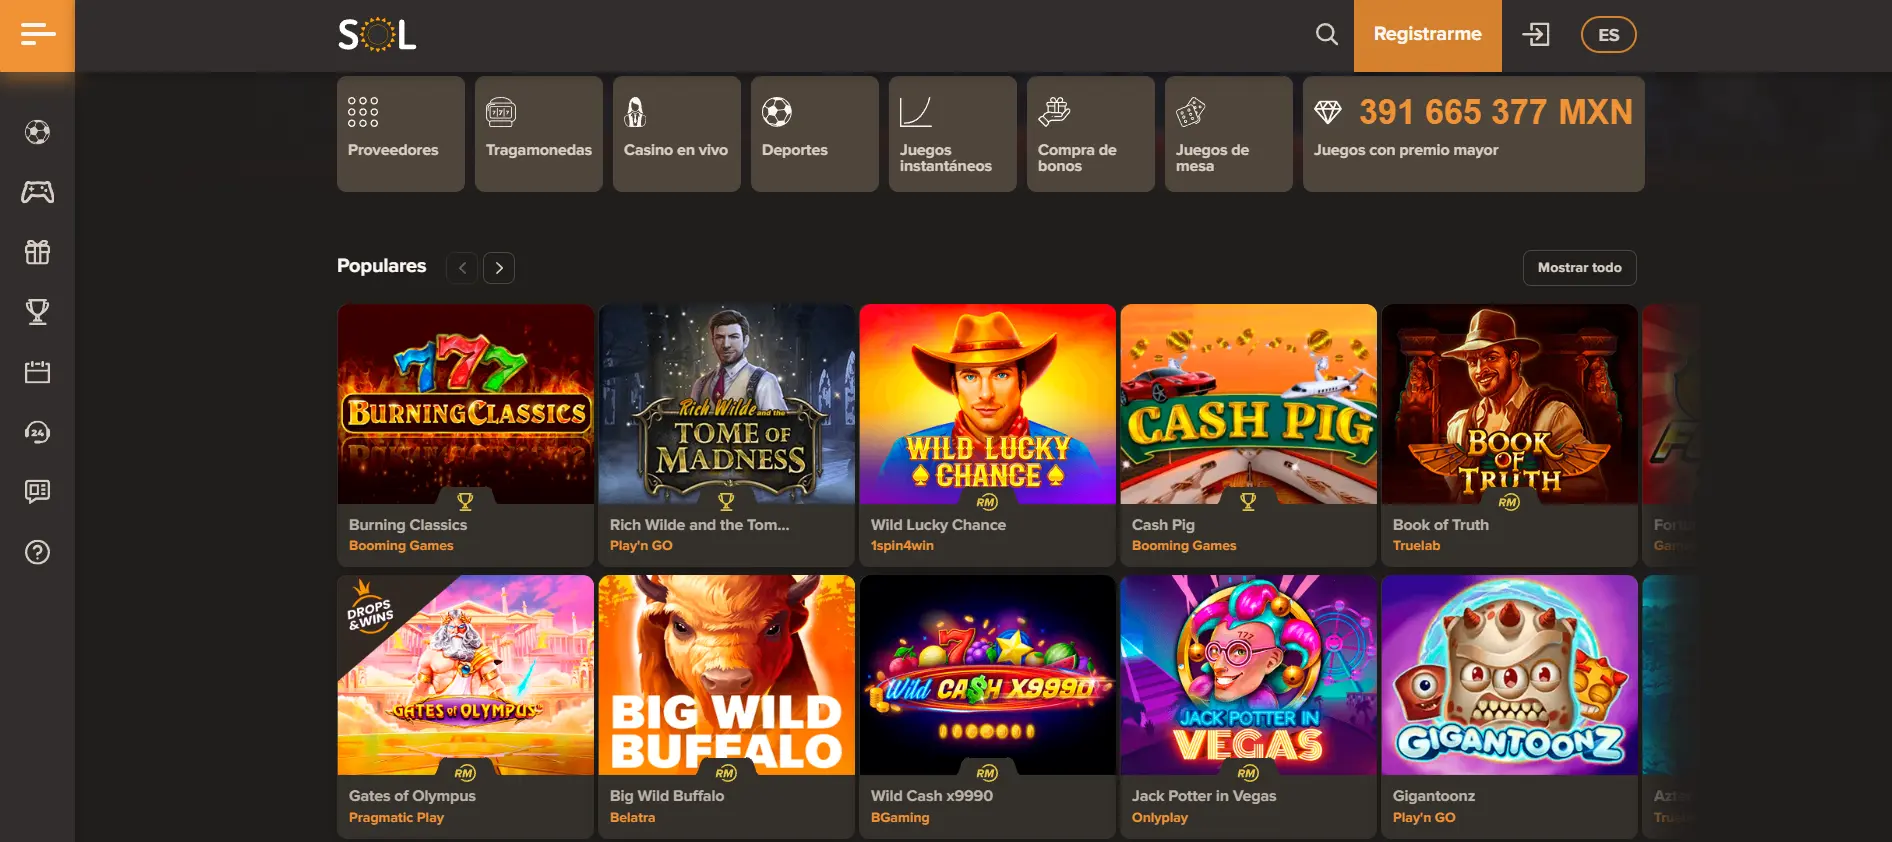 app sol casino online